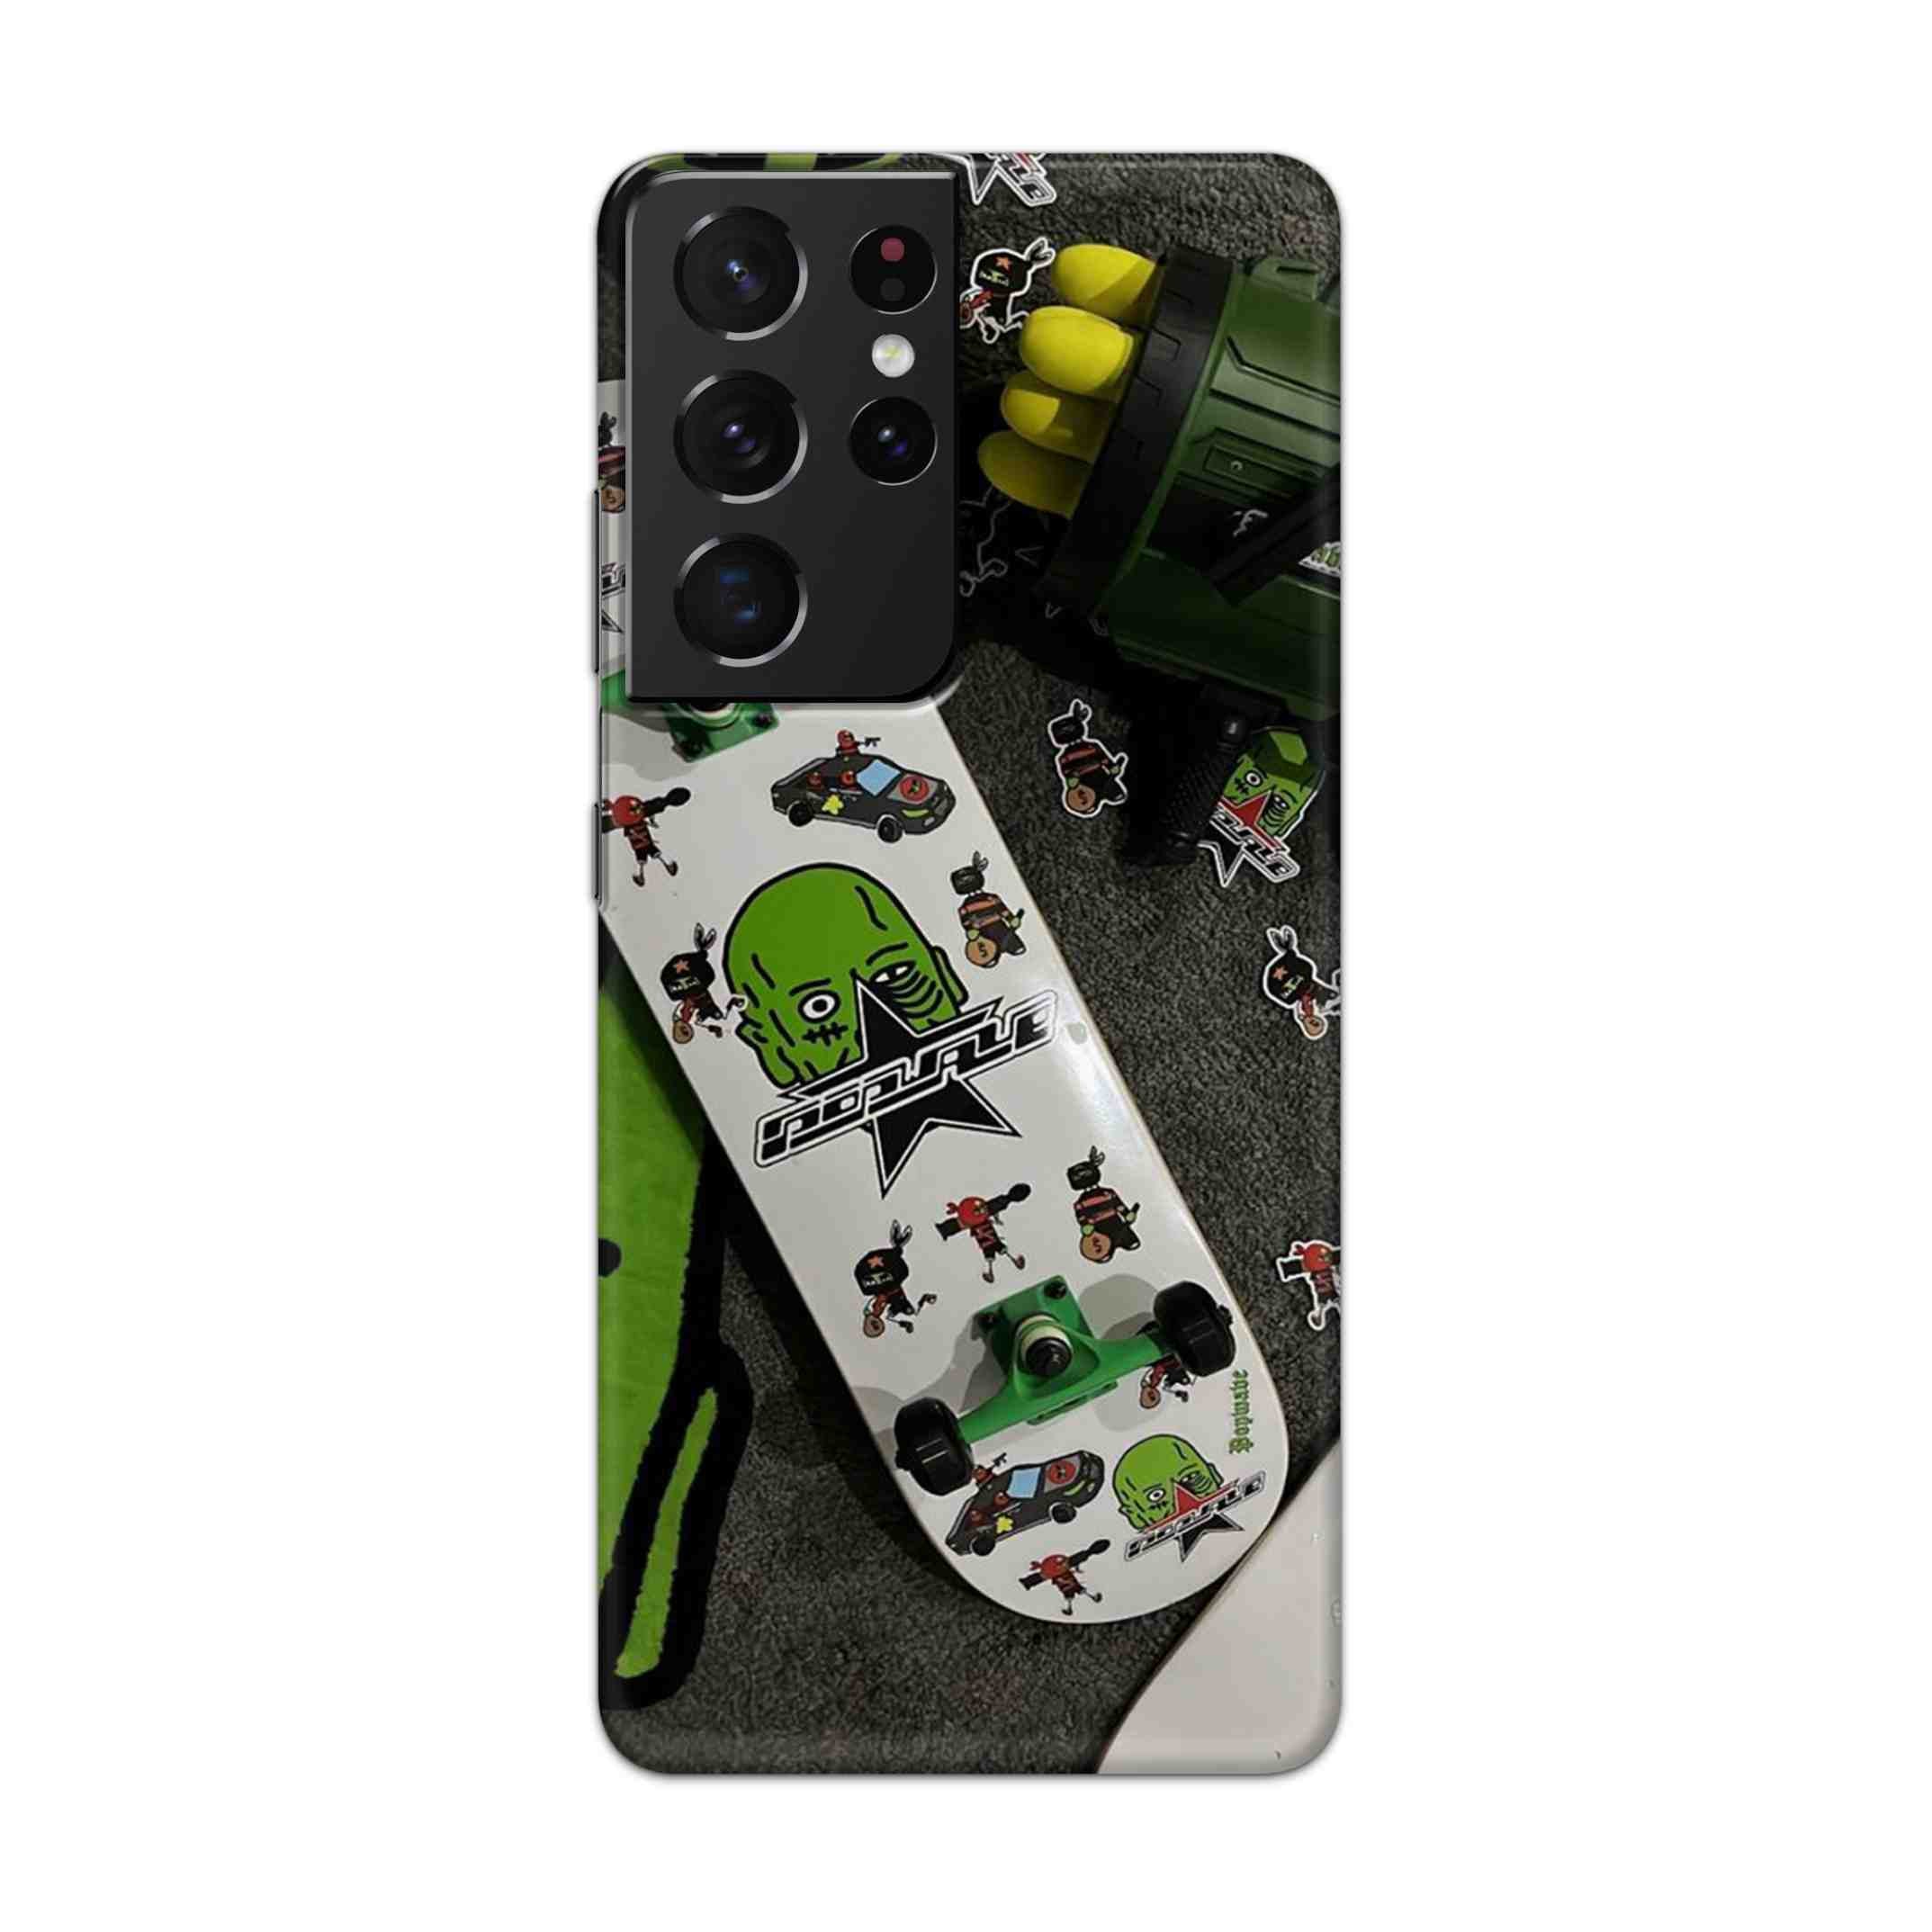 Buy Hulk Skateboard Hard Back Mobile Phone Case Cover For Samsung Galaxy S21 Ultra Online